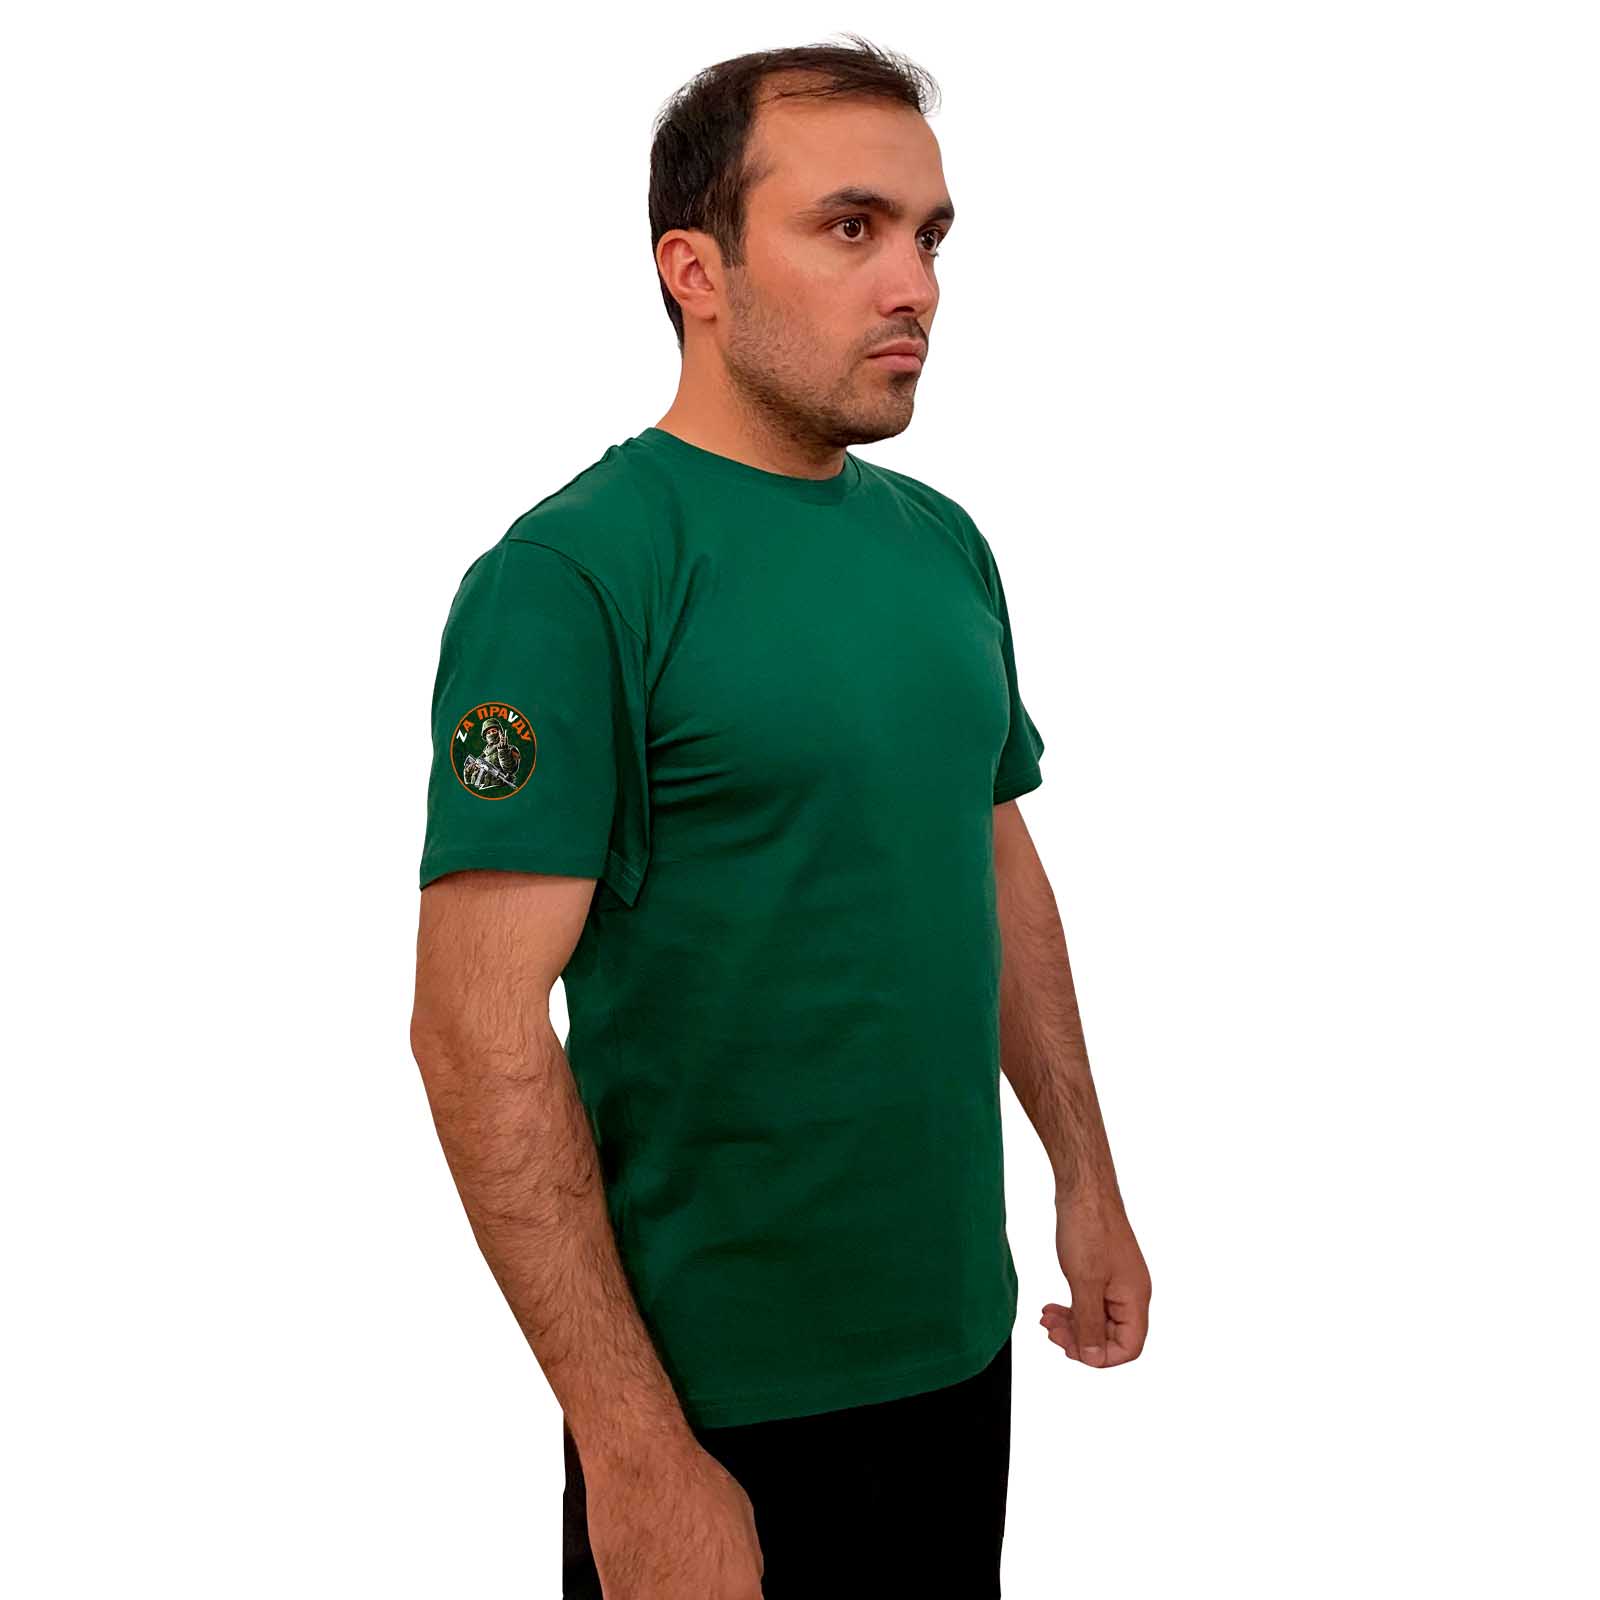 Зелёная футболка с термопринтом "Zа праVду" на рукаве